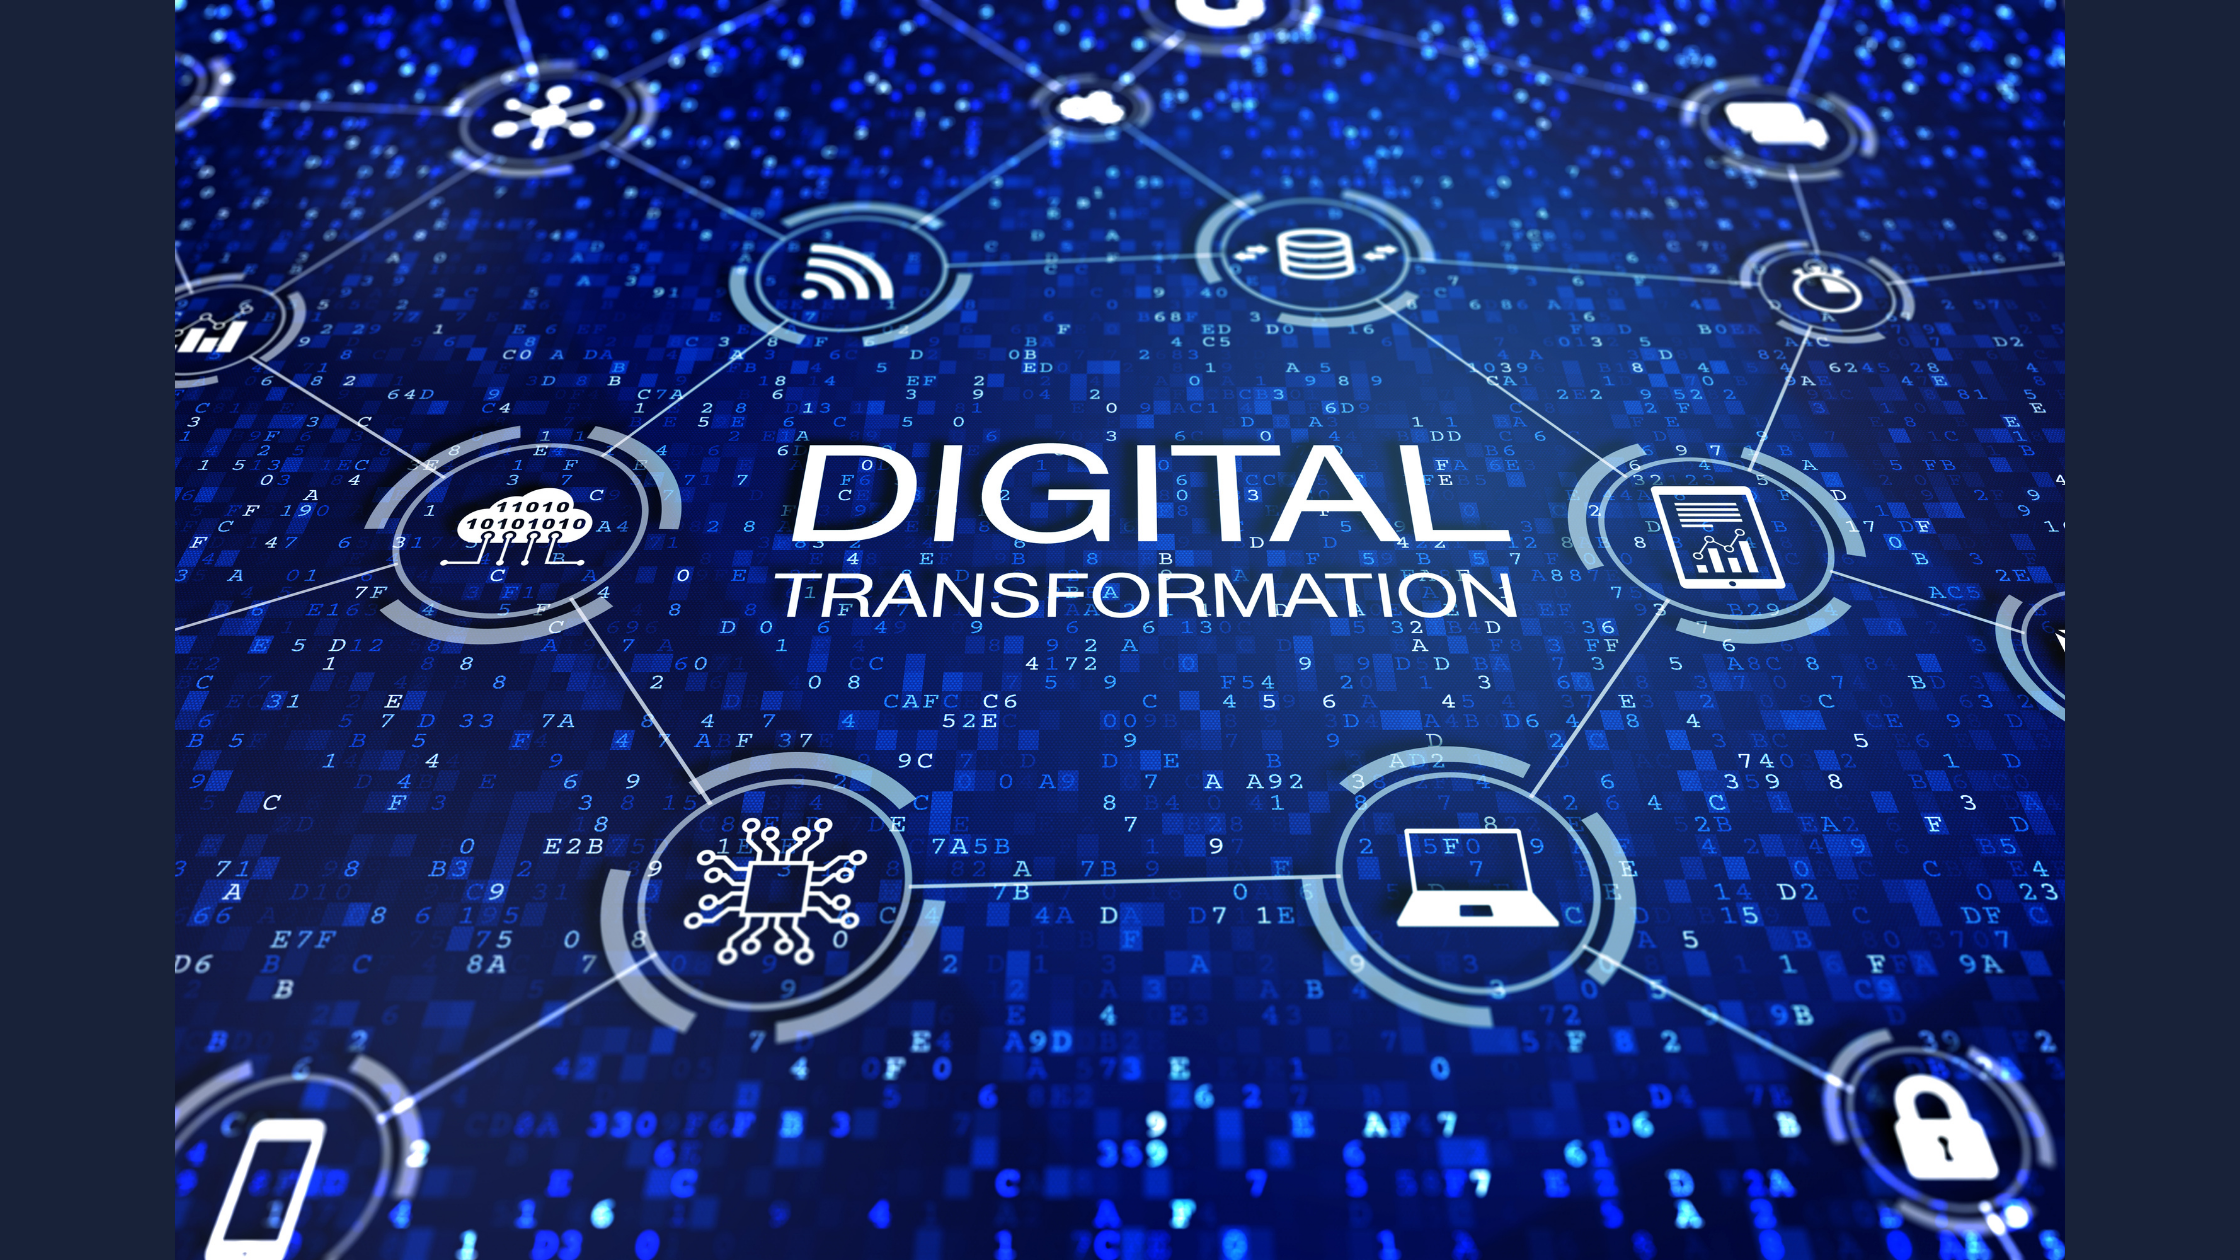 Digital Transformation and Knowledge Transfer